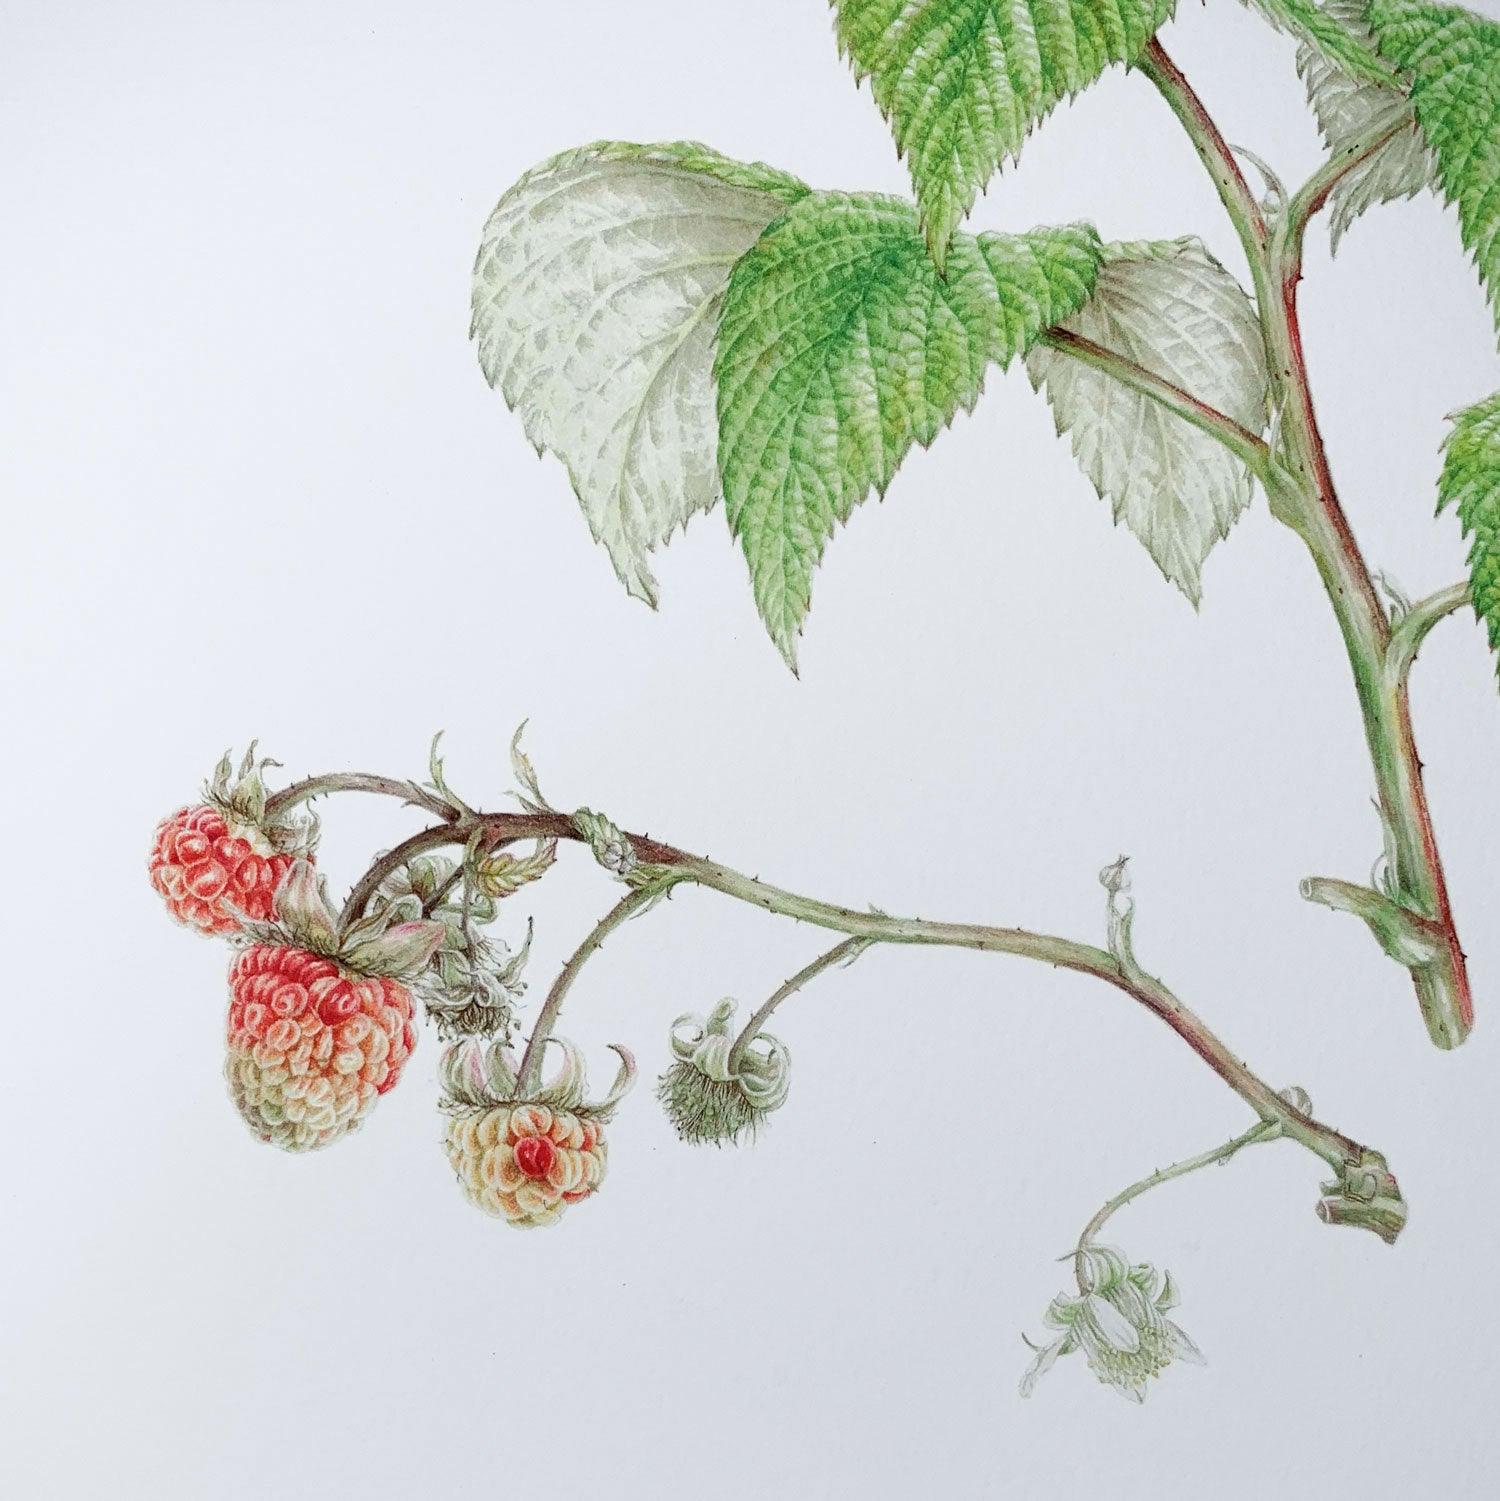 Limited Edition Print "Raspberry" - Michael Michaud Jewellery